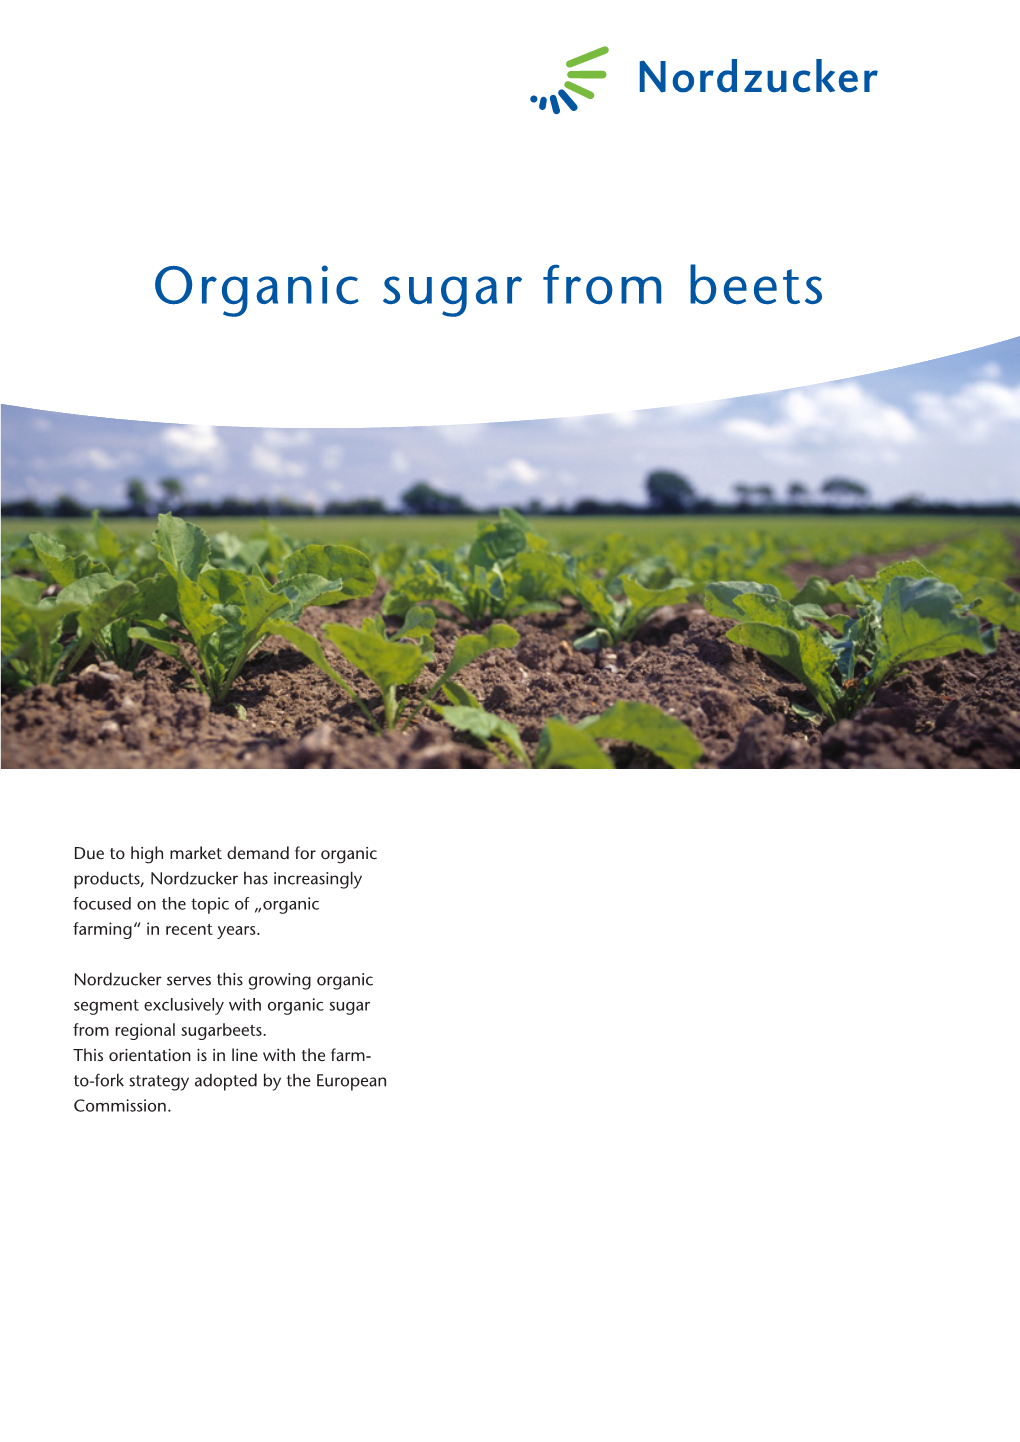 Organic Sugar from Beets